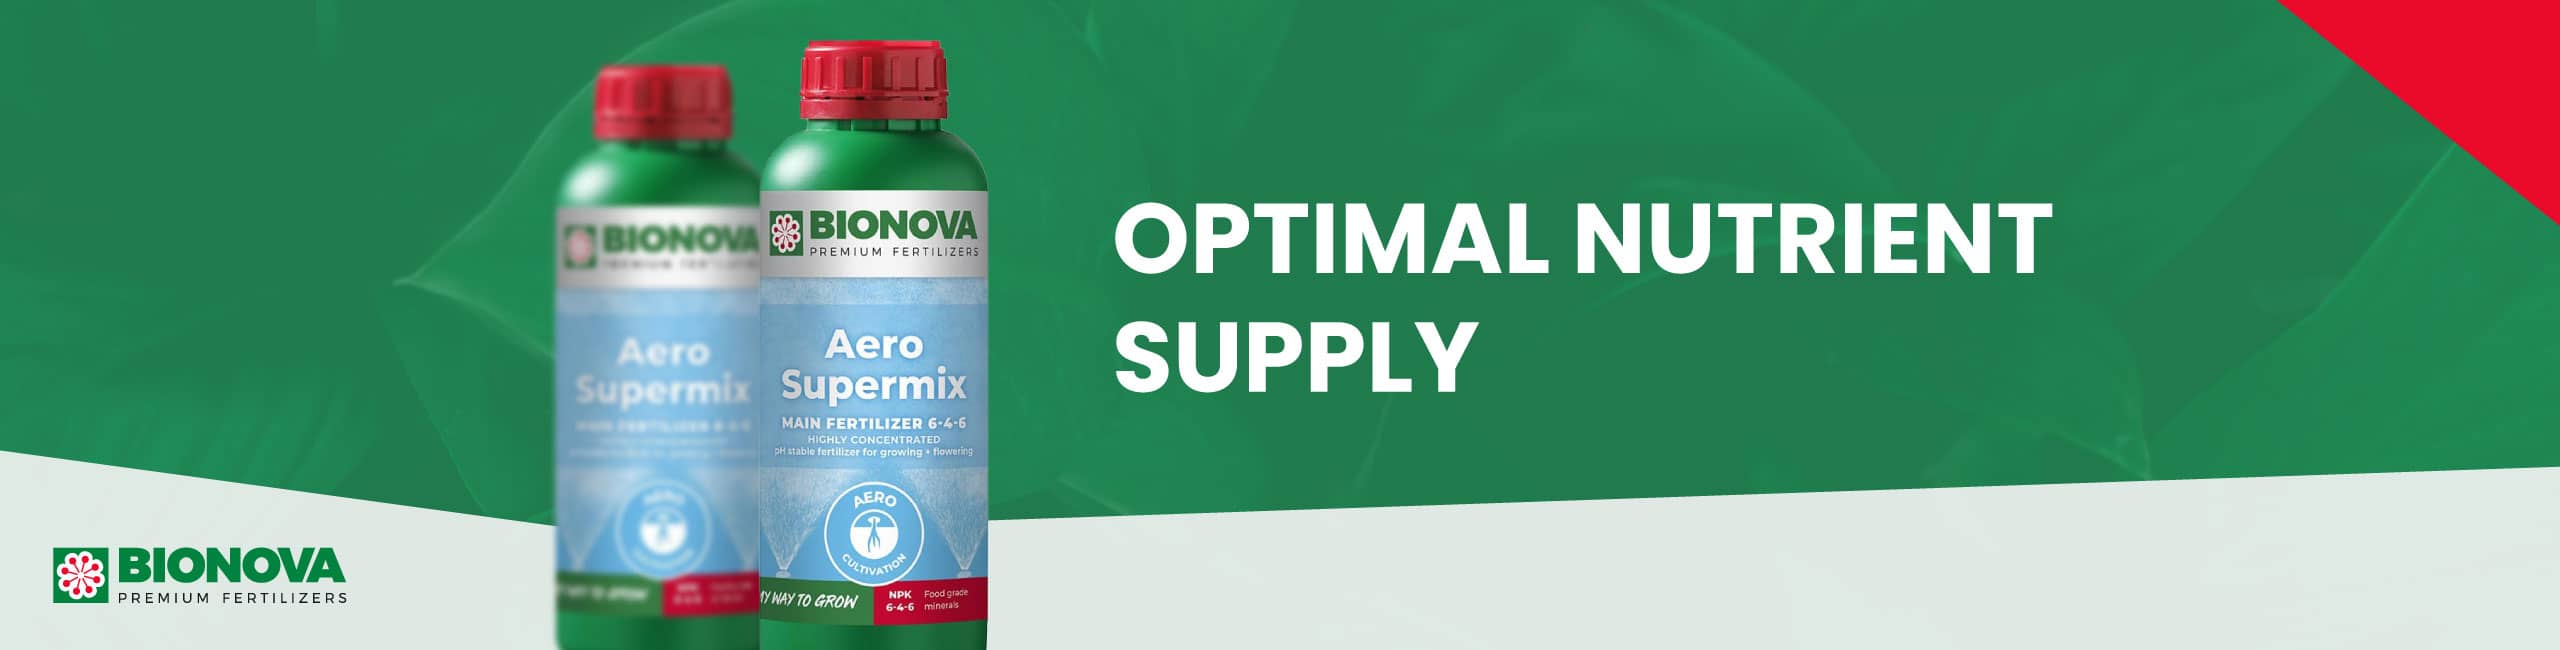 Bionova Aero Supermix Optimal Nutrient Supply